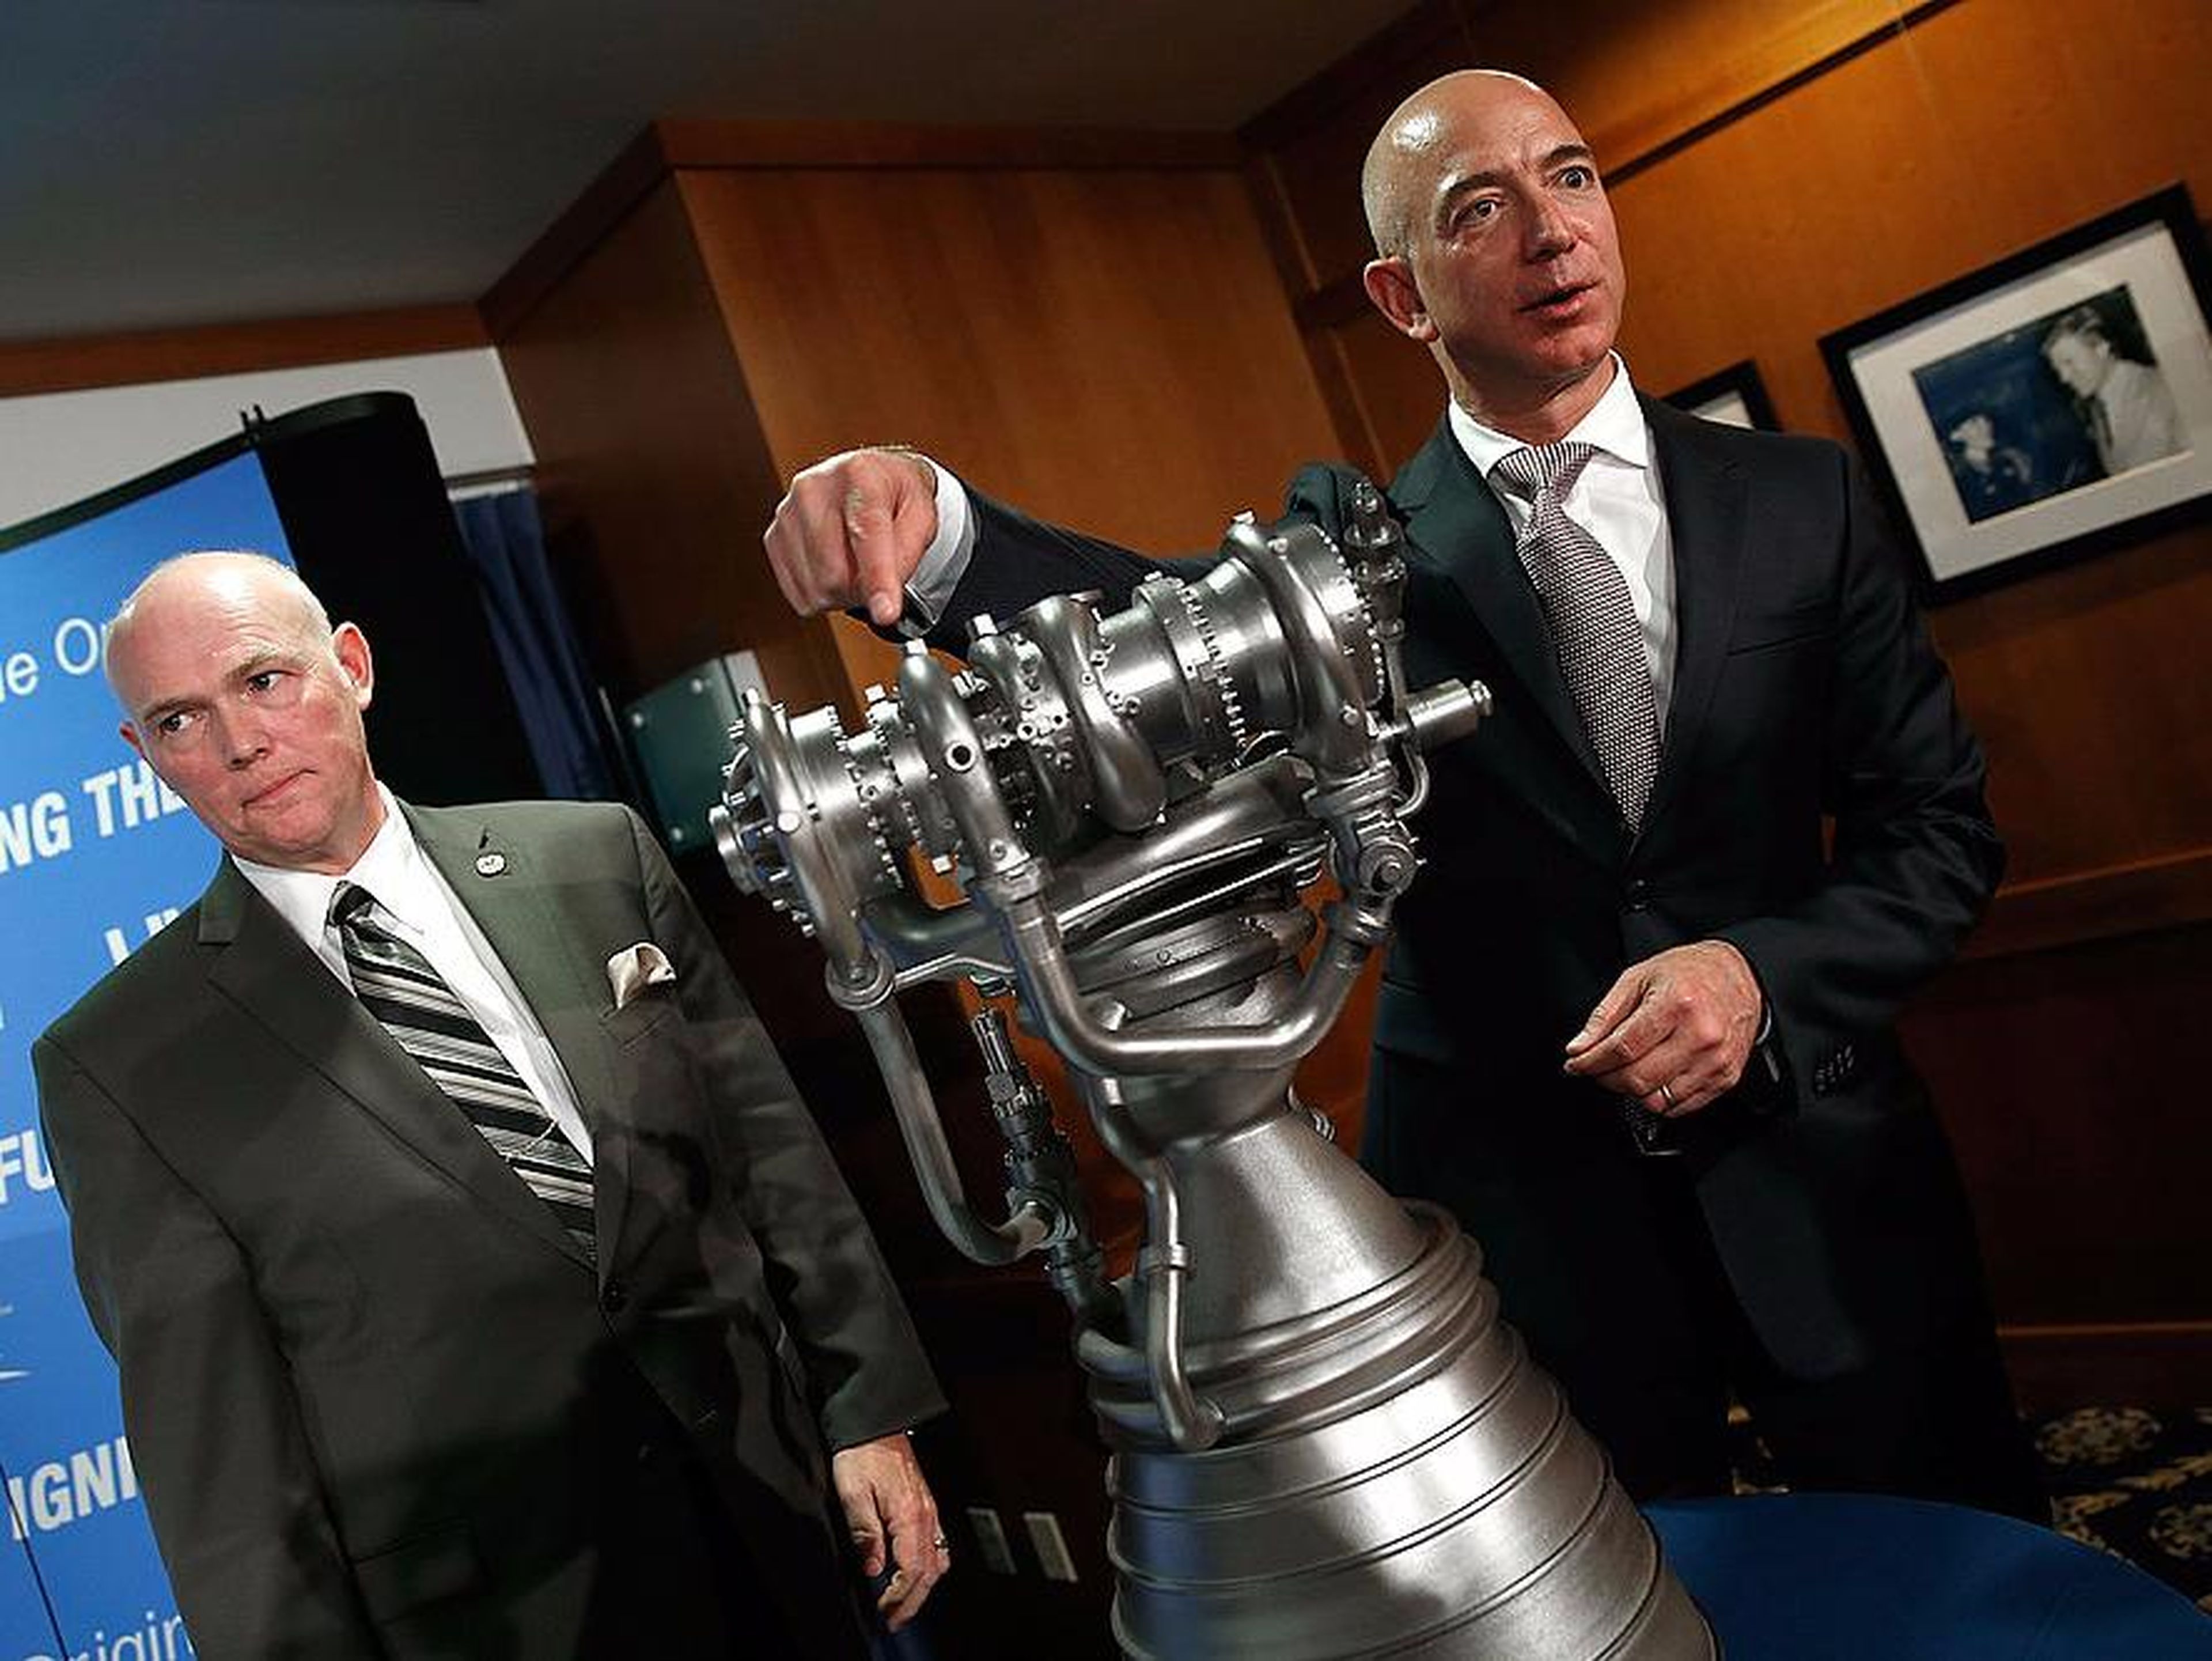 Bezos with a model rocket.